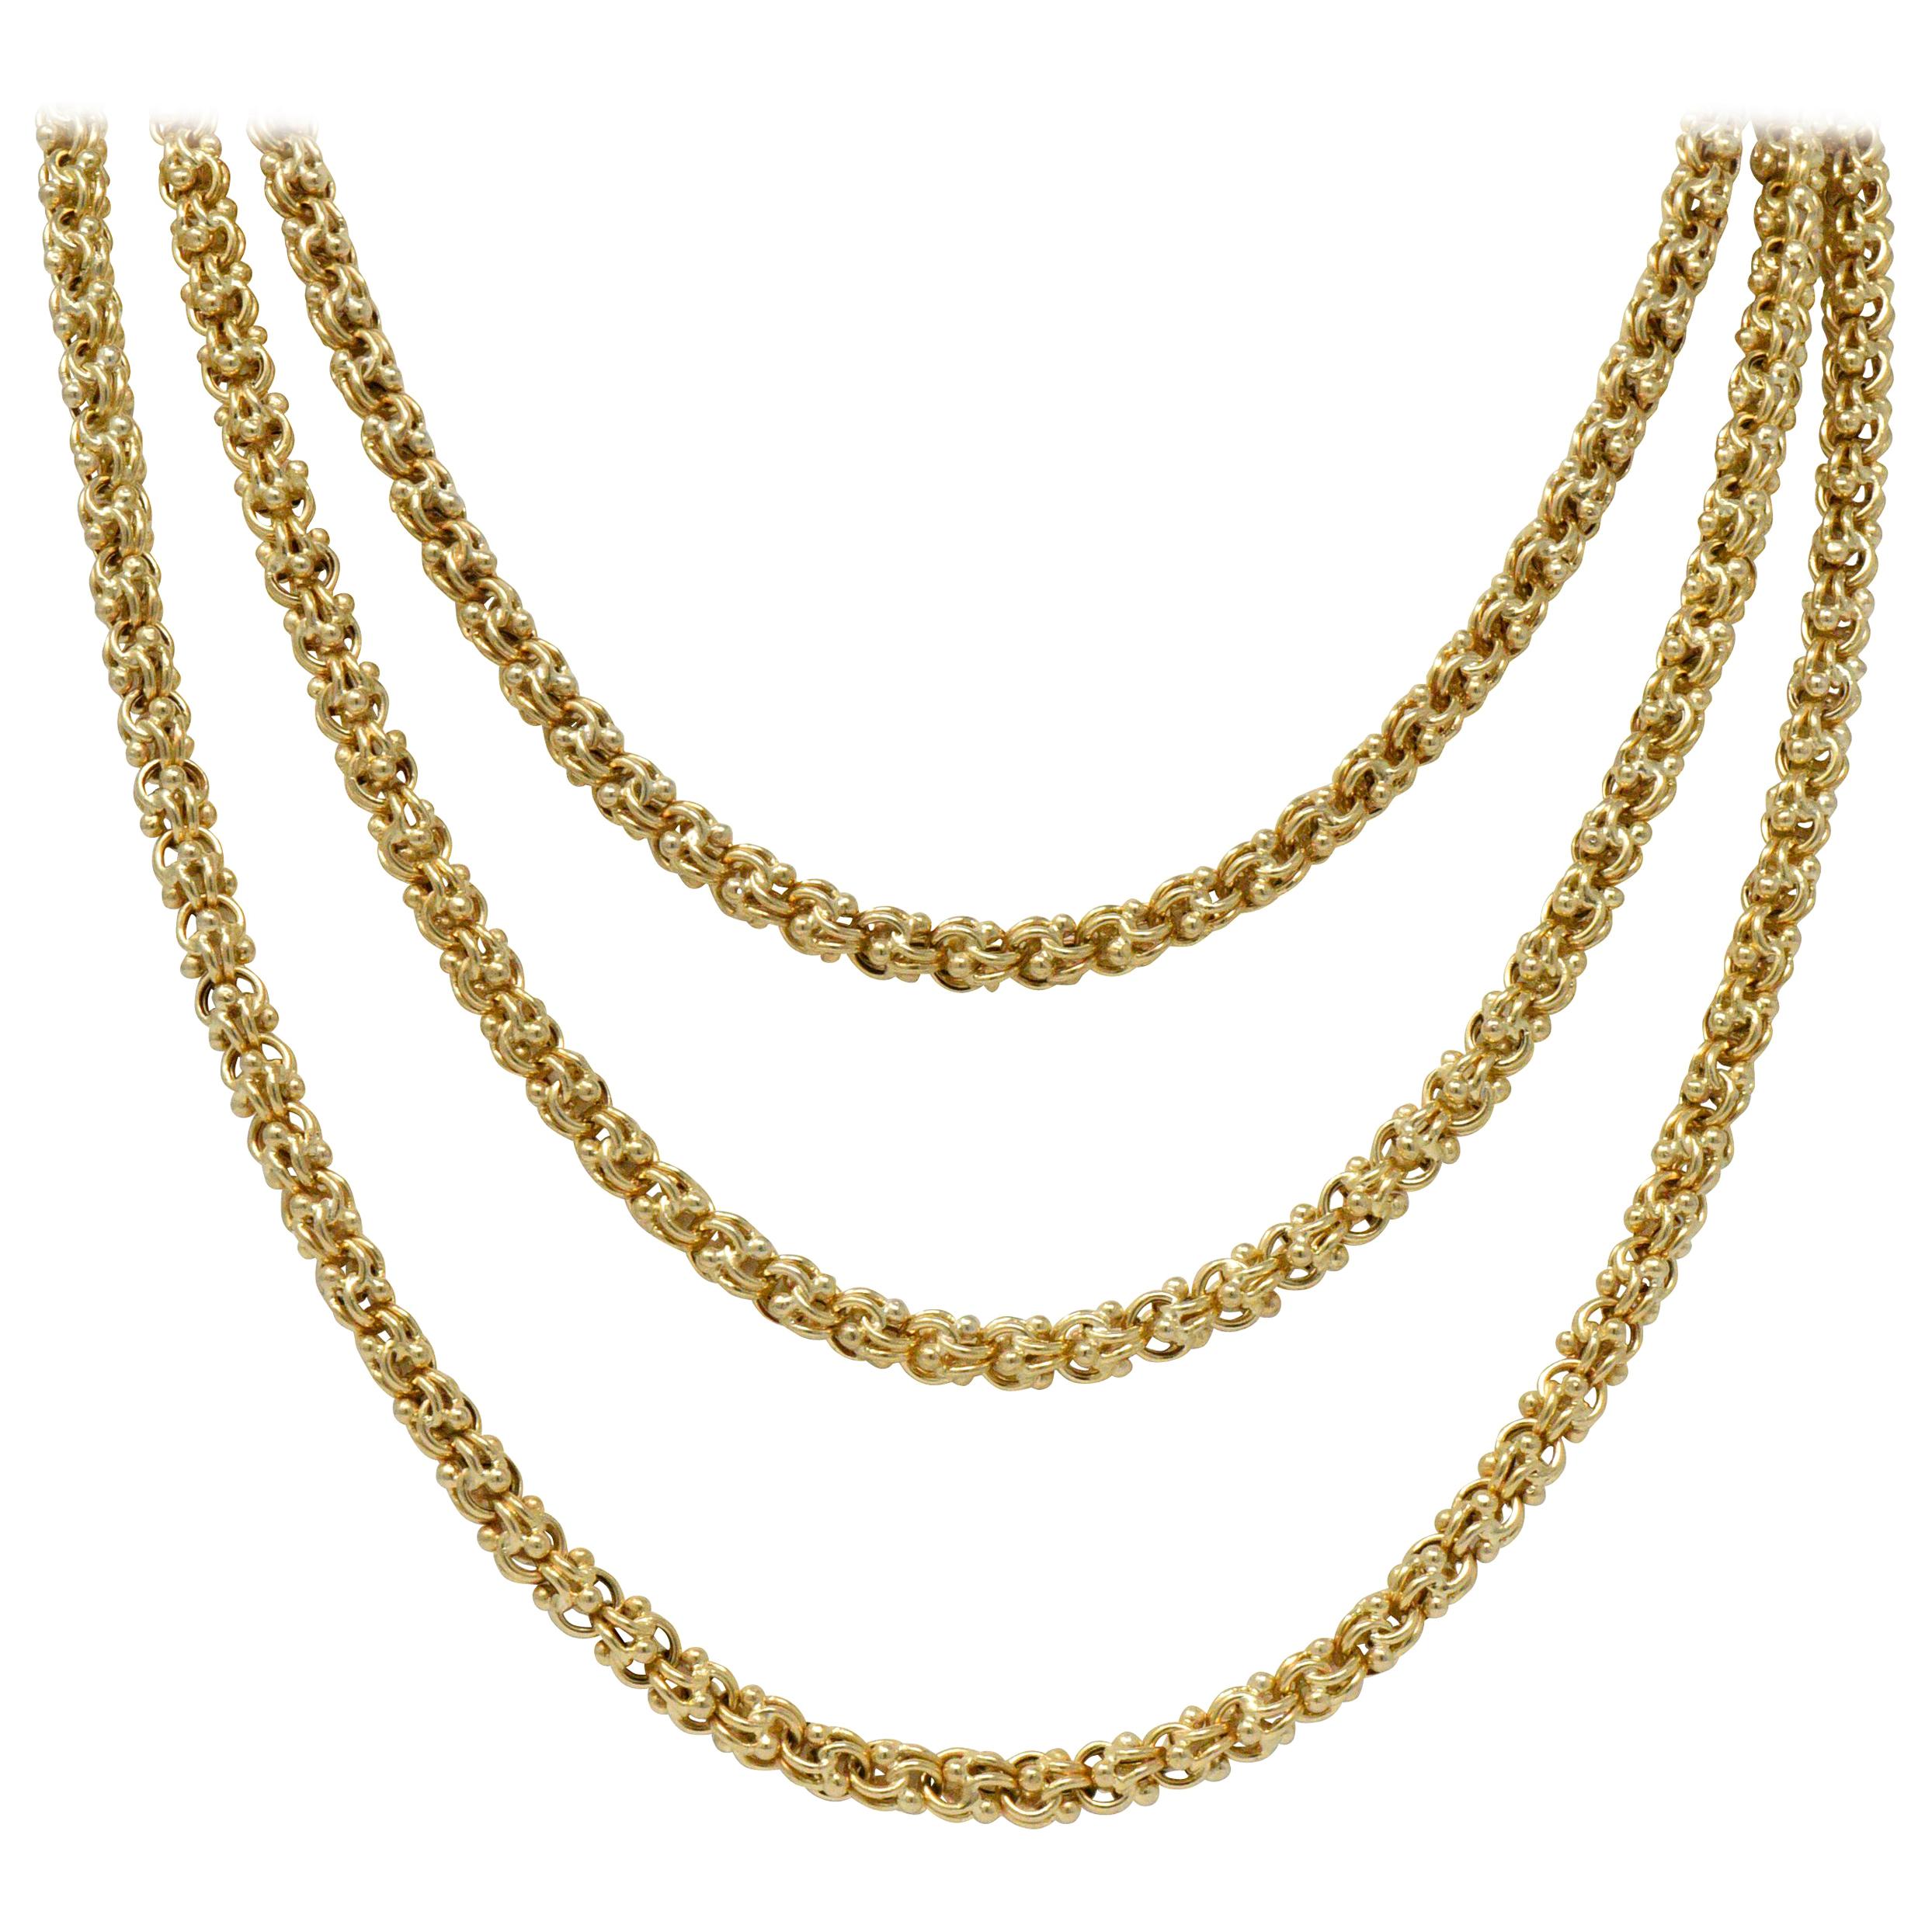 Victorian 15 Karat Gold Long Chain Necklace